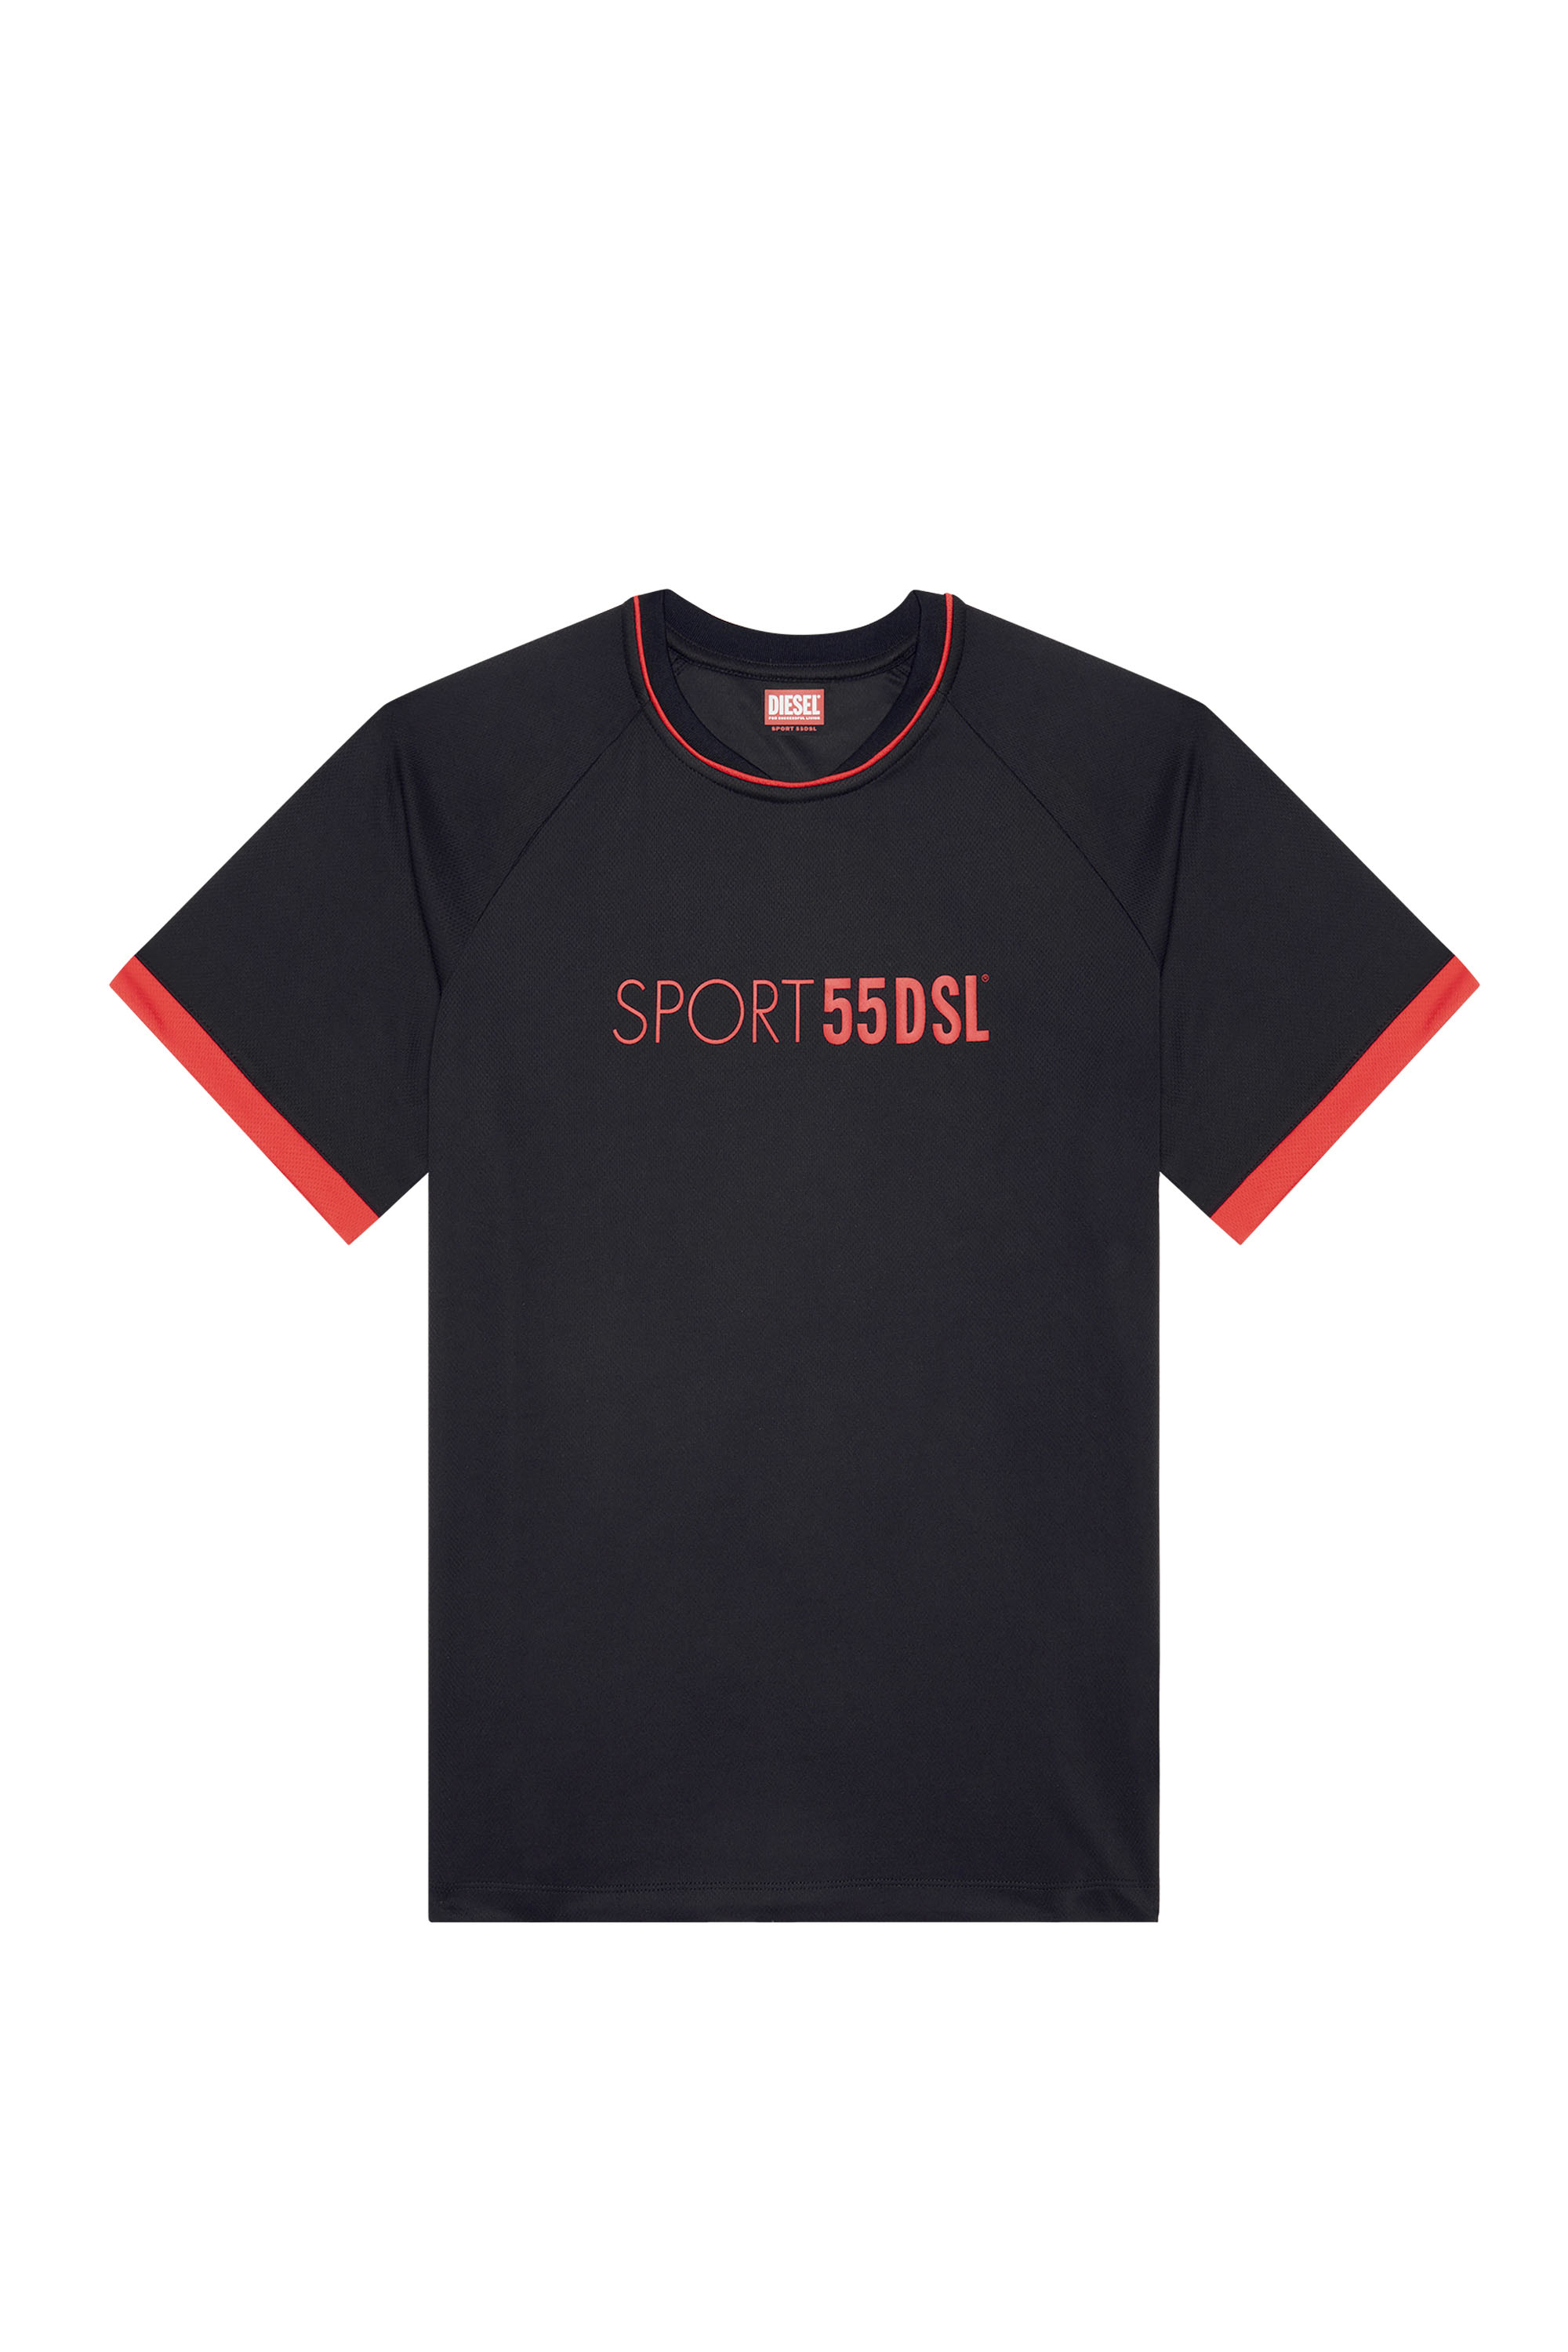 AMTEE-CROSSOON-WT15, Black - T-Shirts